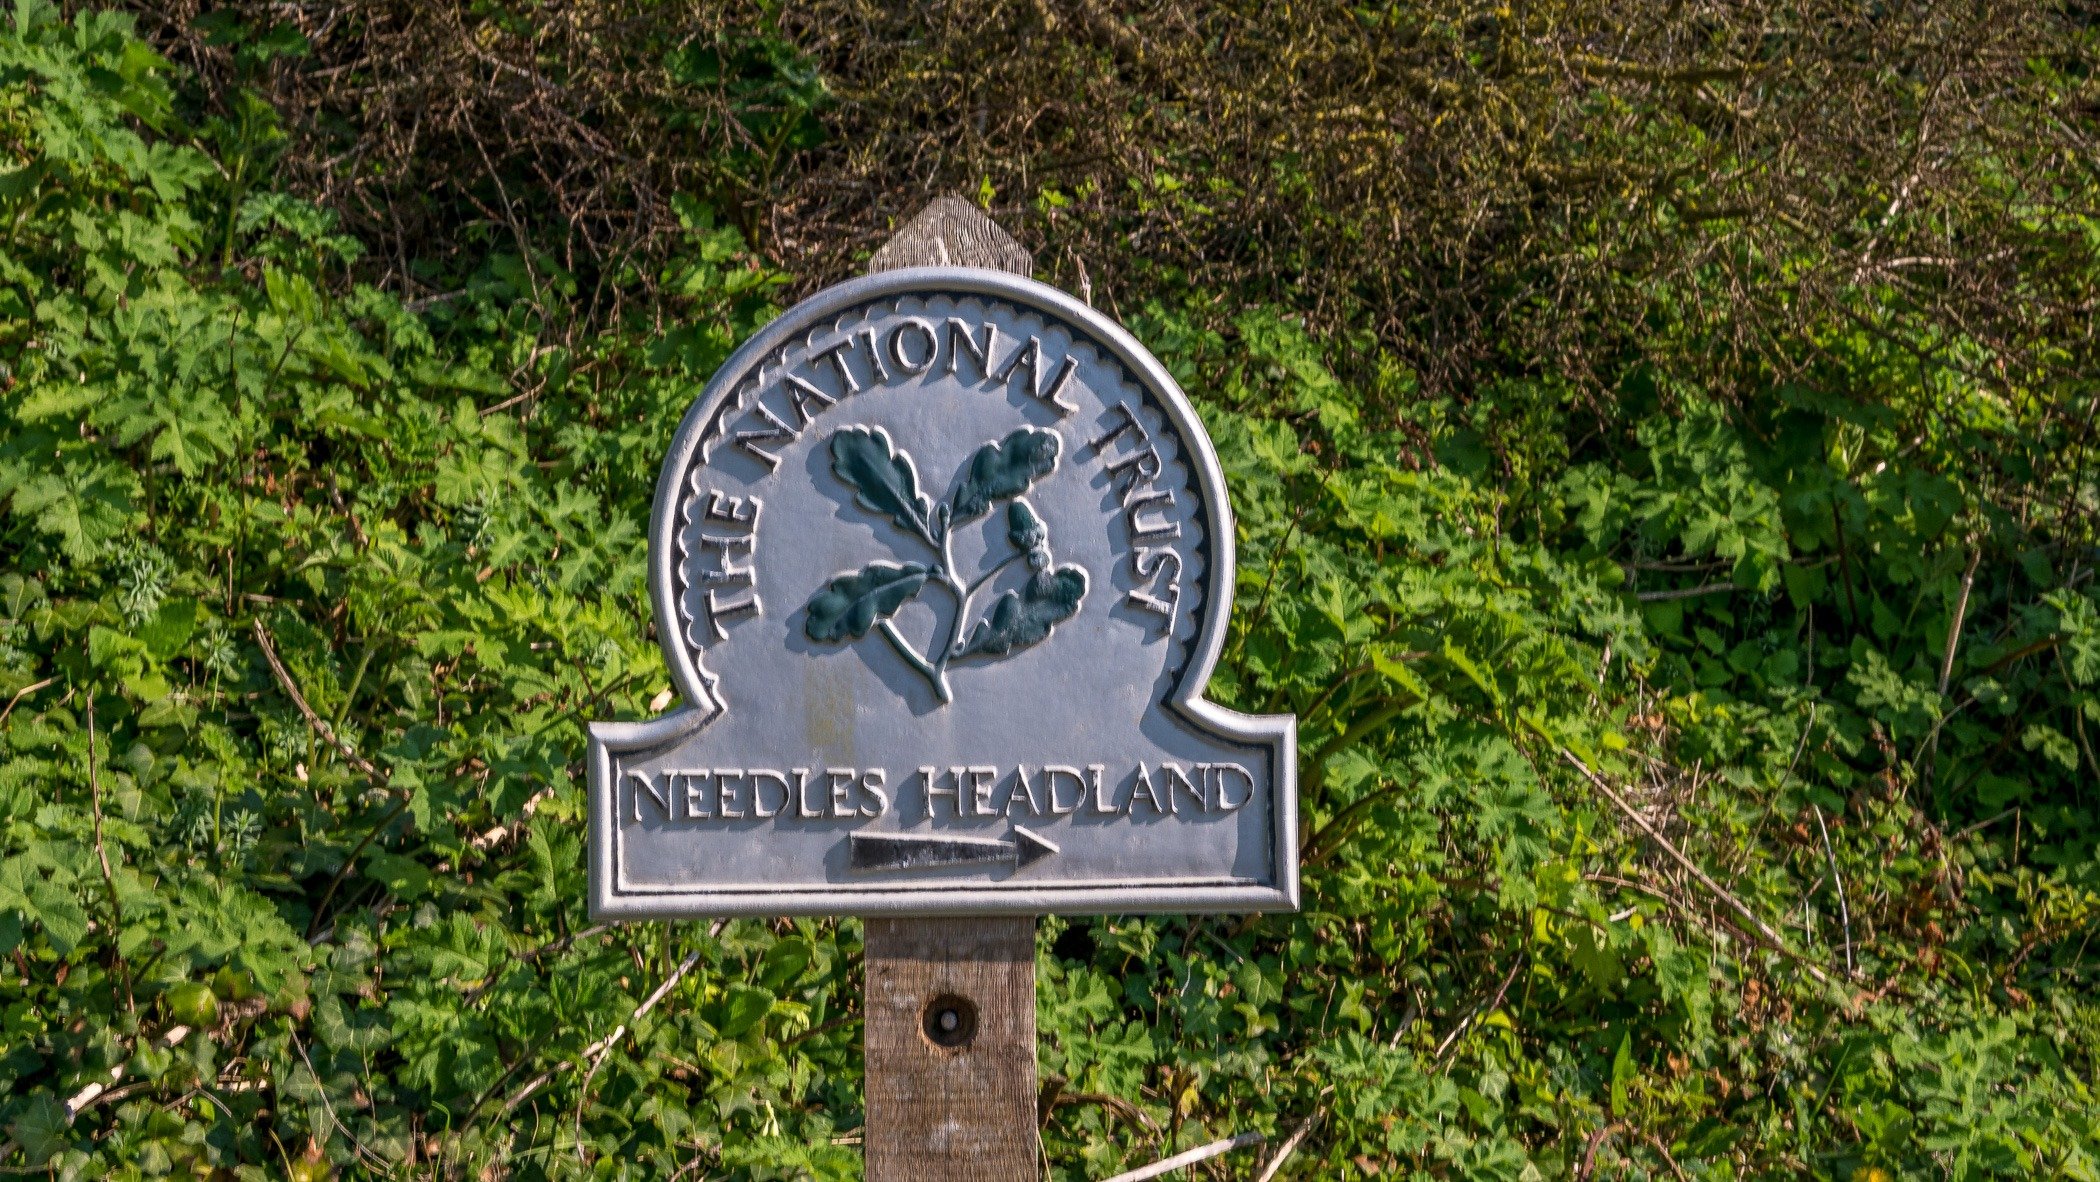 The Needles Headland Walk